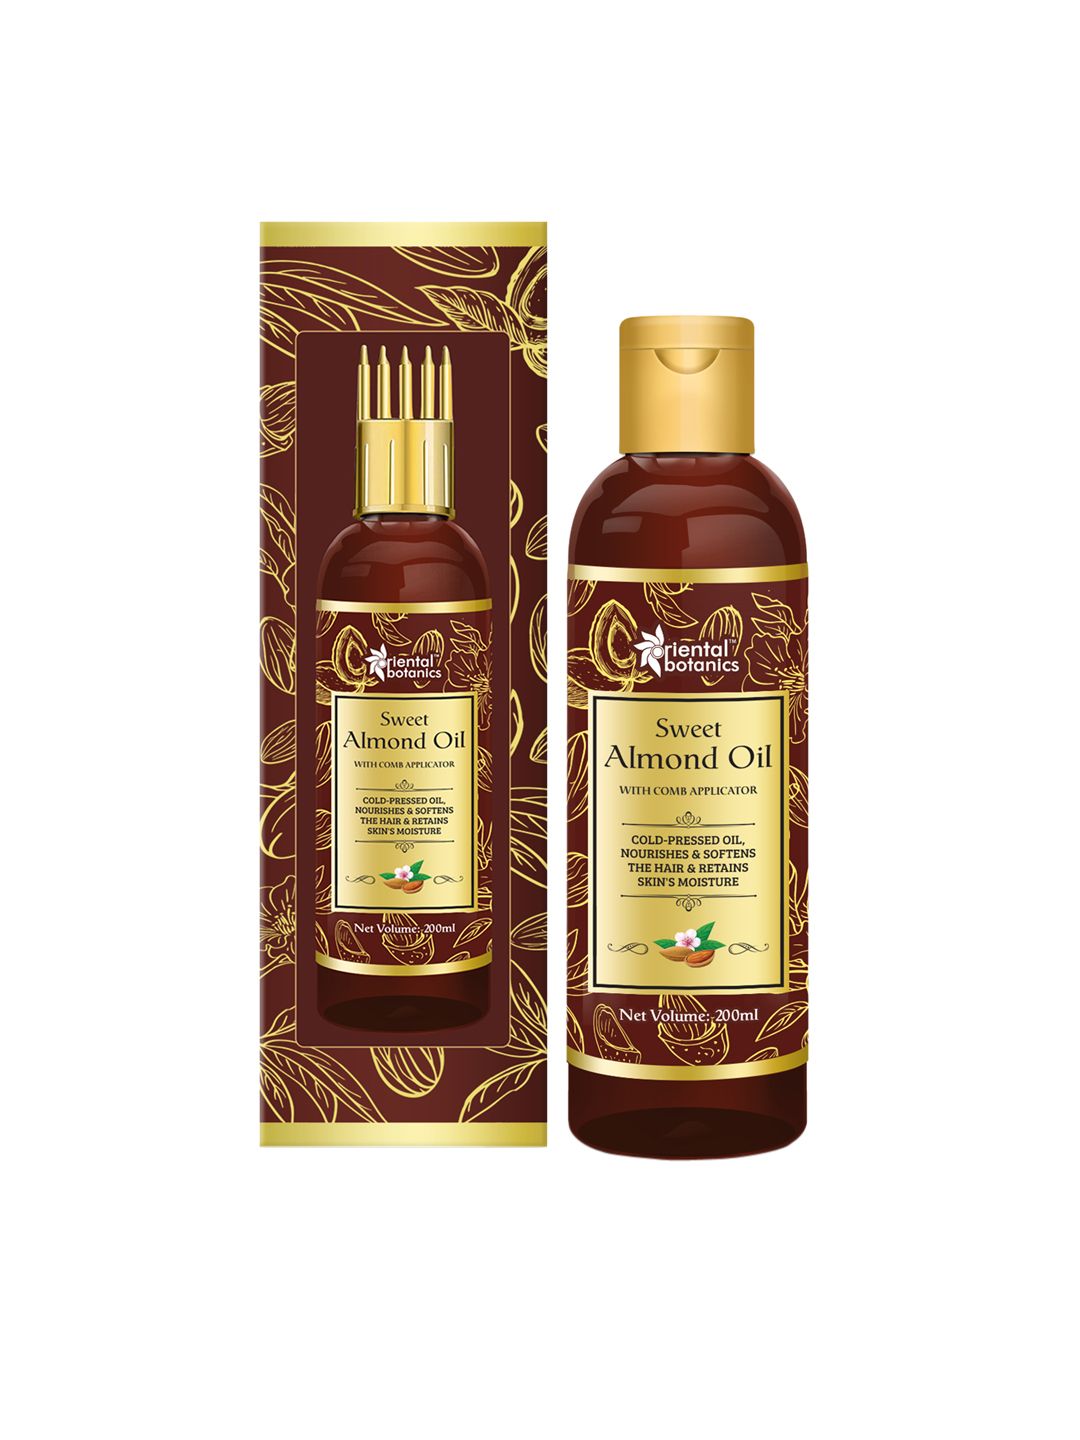 Oriental Botanics Sweet Almond Oil With Comb Applicator 200 ml Price in India